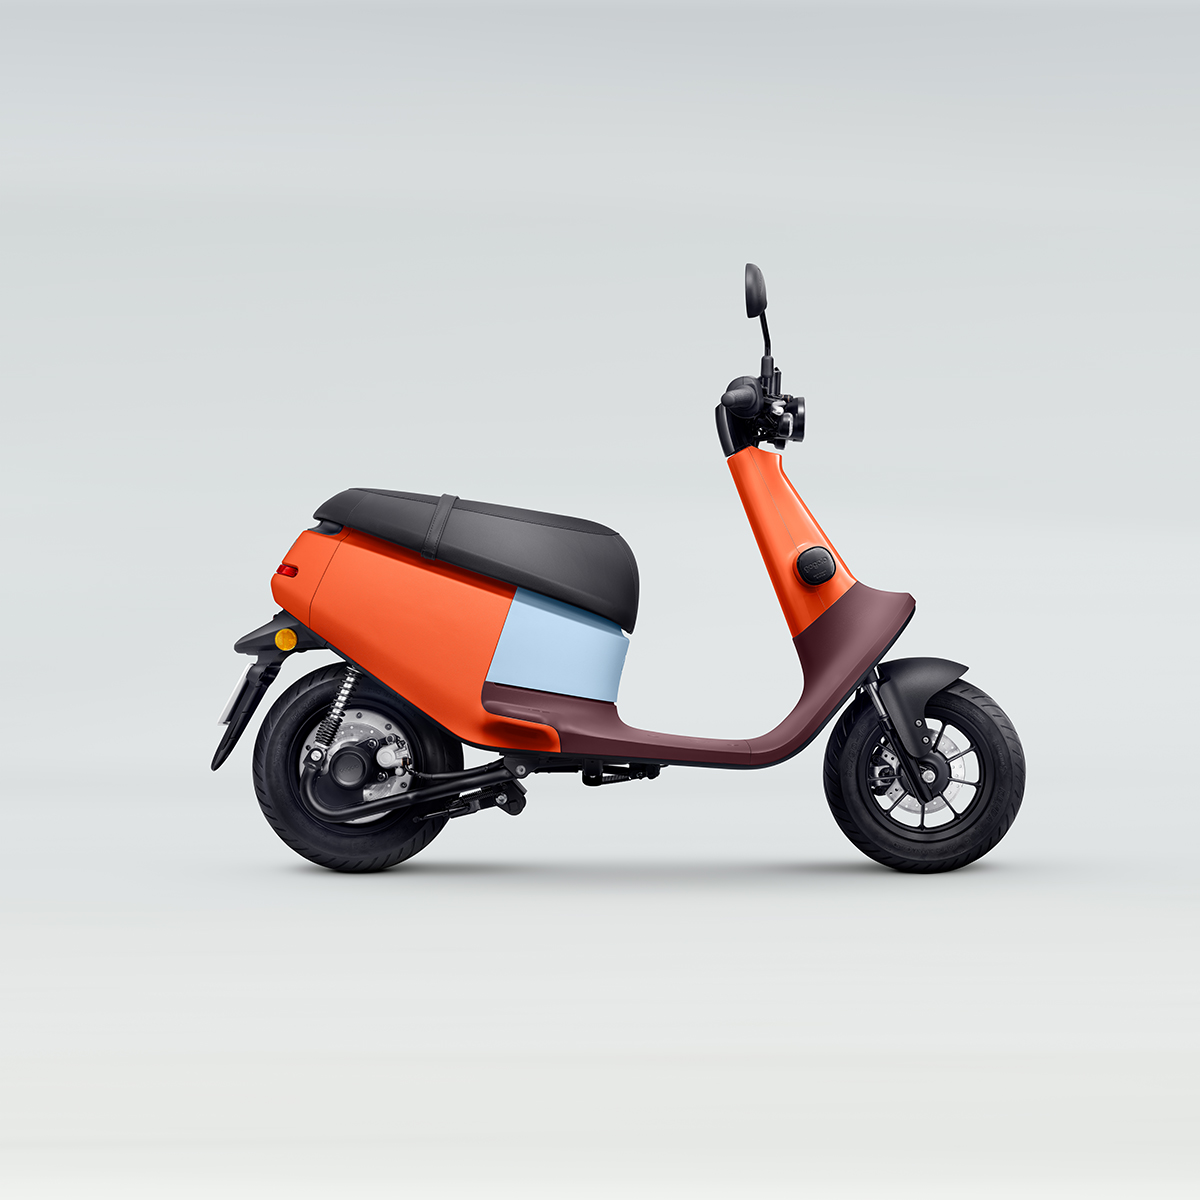 lightweight scooter called Viva 